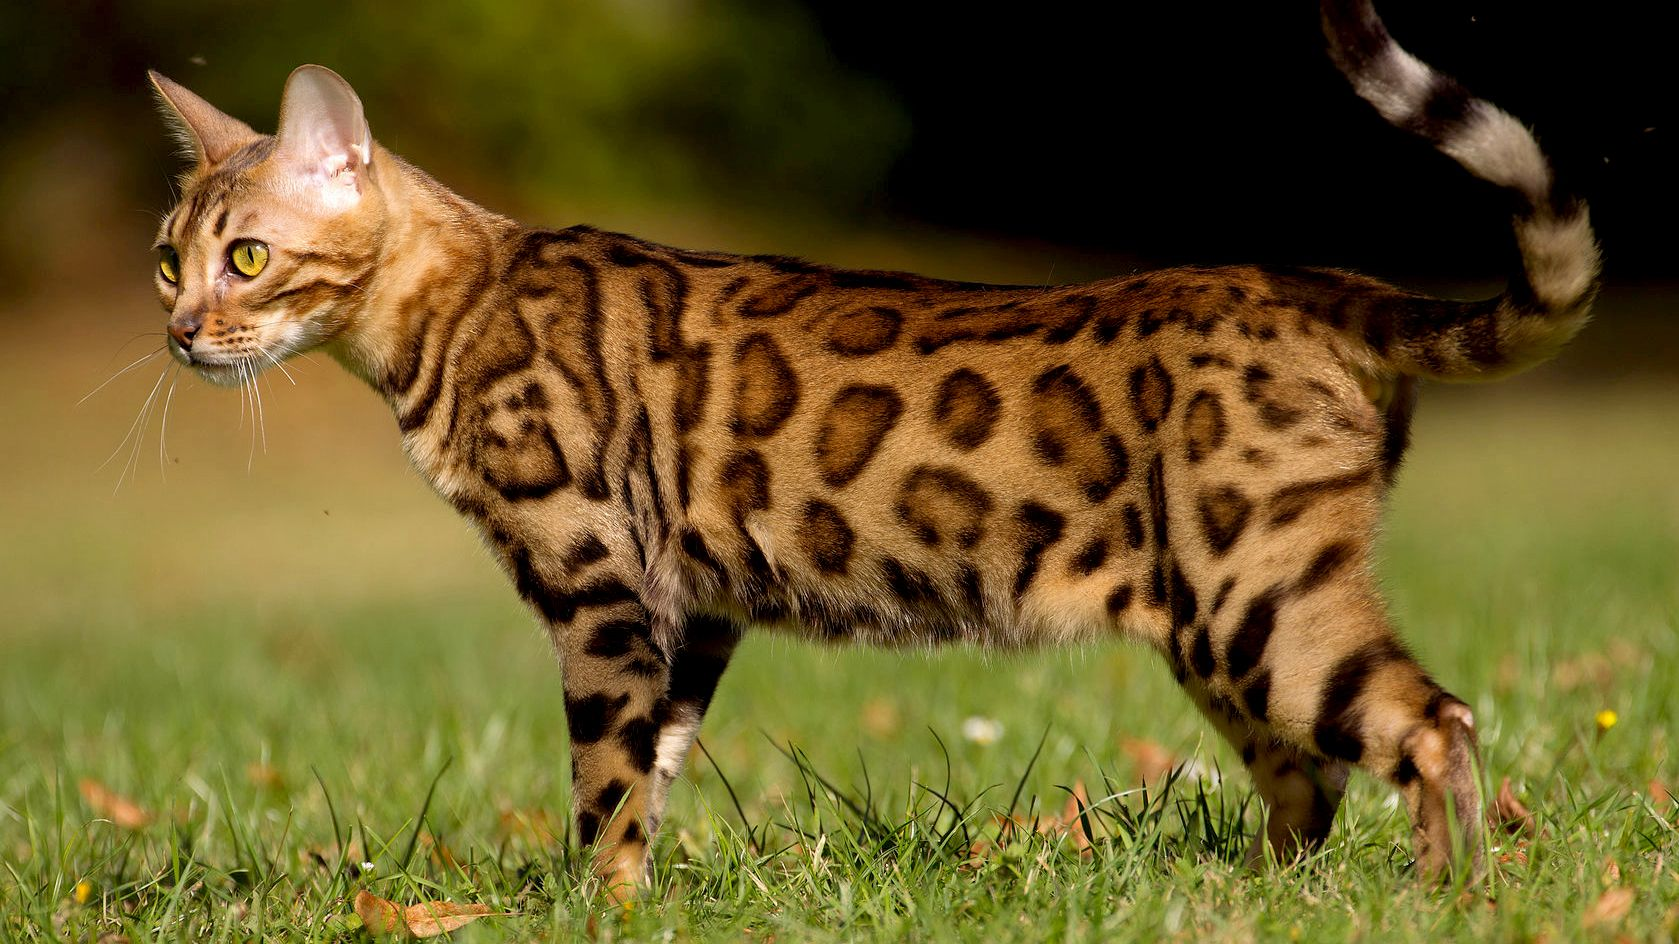 Vista lateral de un gato Bengalí caminando sobre la hierba